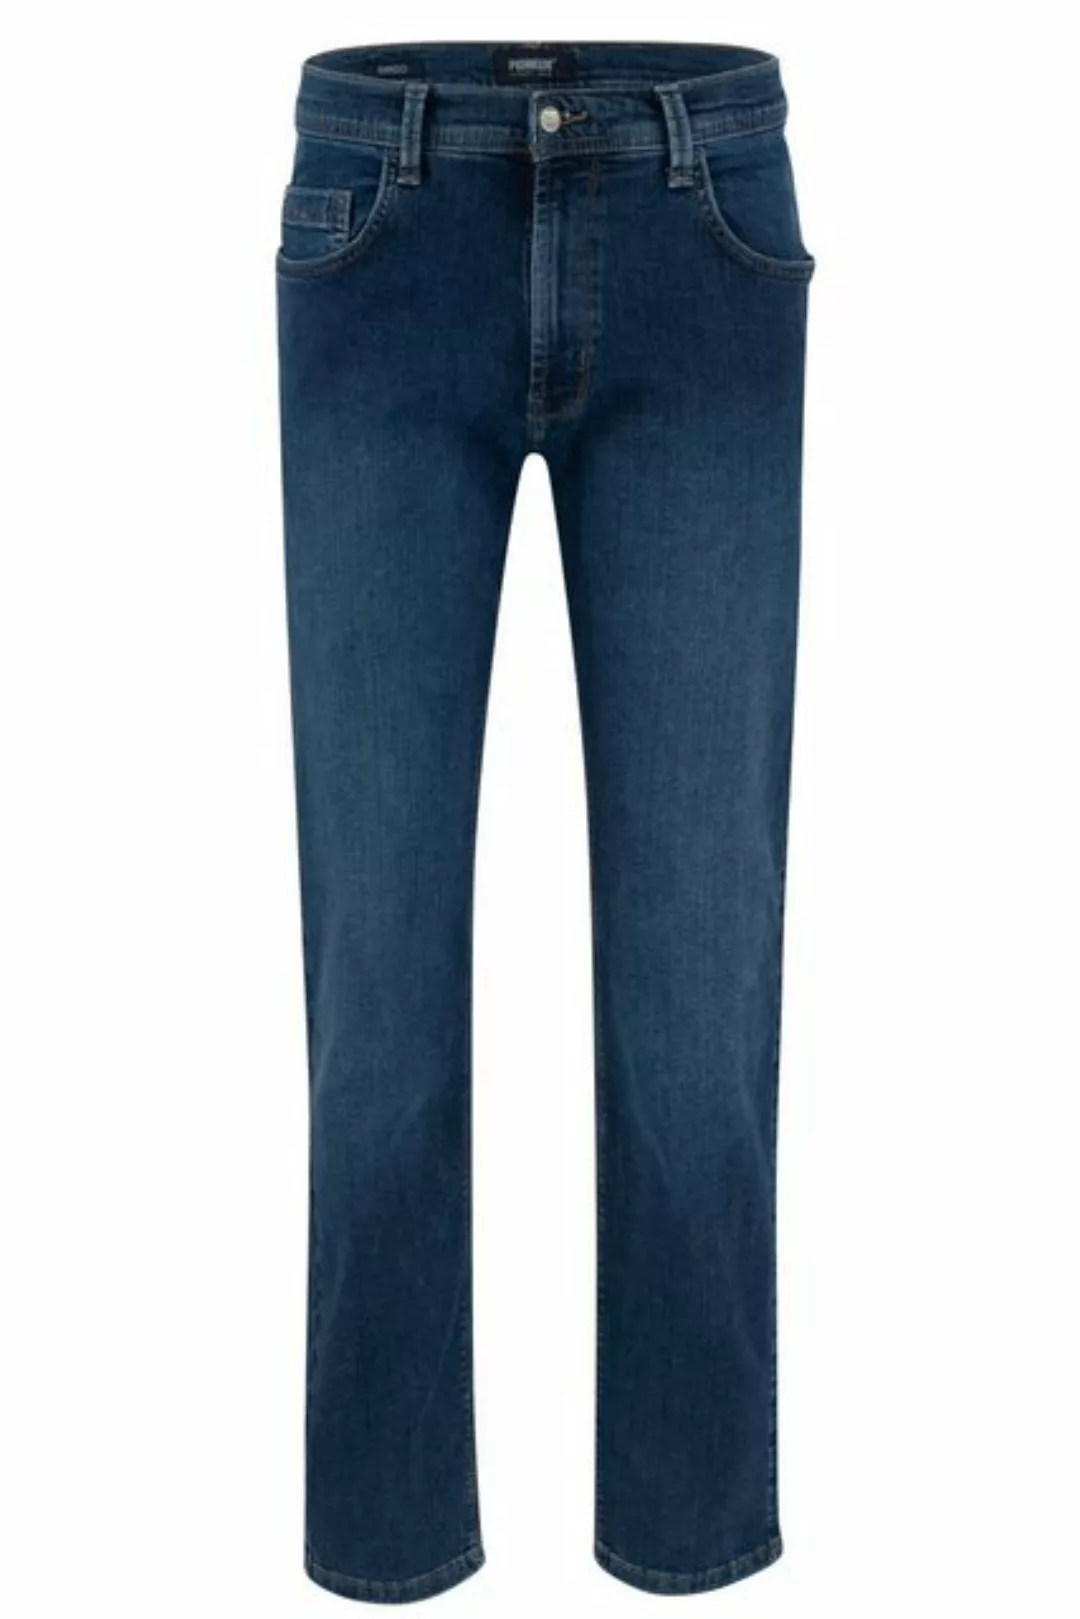 Pioneer Authentic Jeans 5-Pocket-Jeans PIONEER RANDO dark blue used 16801 6 günstig online kaufen